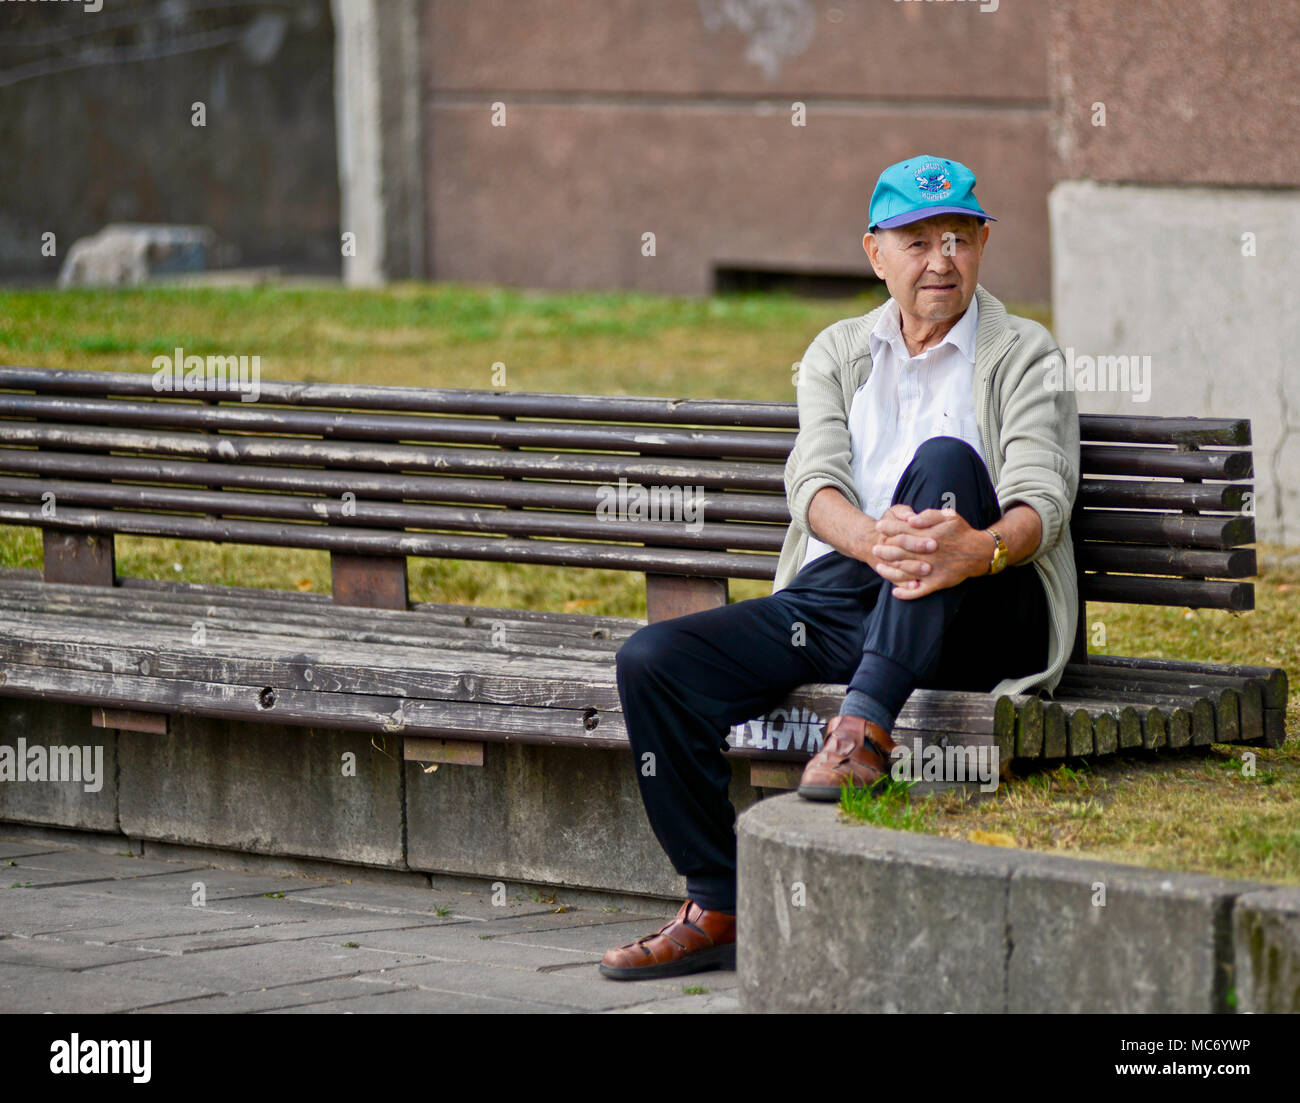 A senior man sitting on a bench wearing a basketball cap (Charlotte Hornets), Kaunas, Lithuania Stock Photo